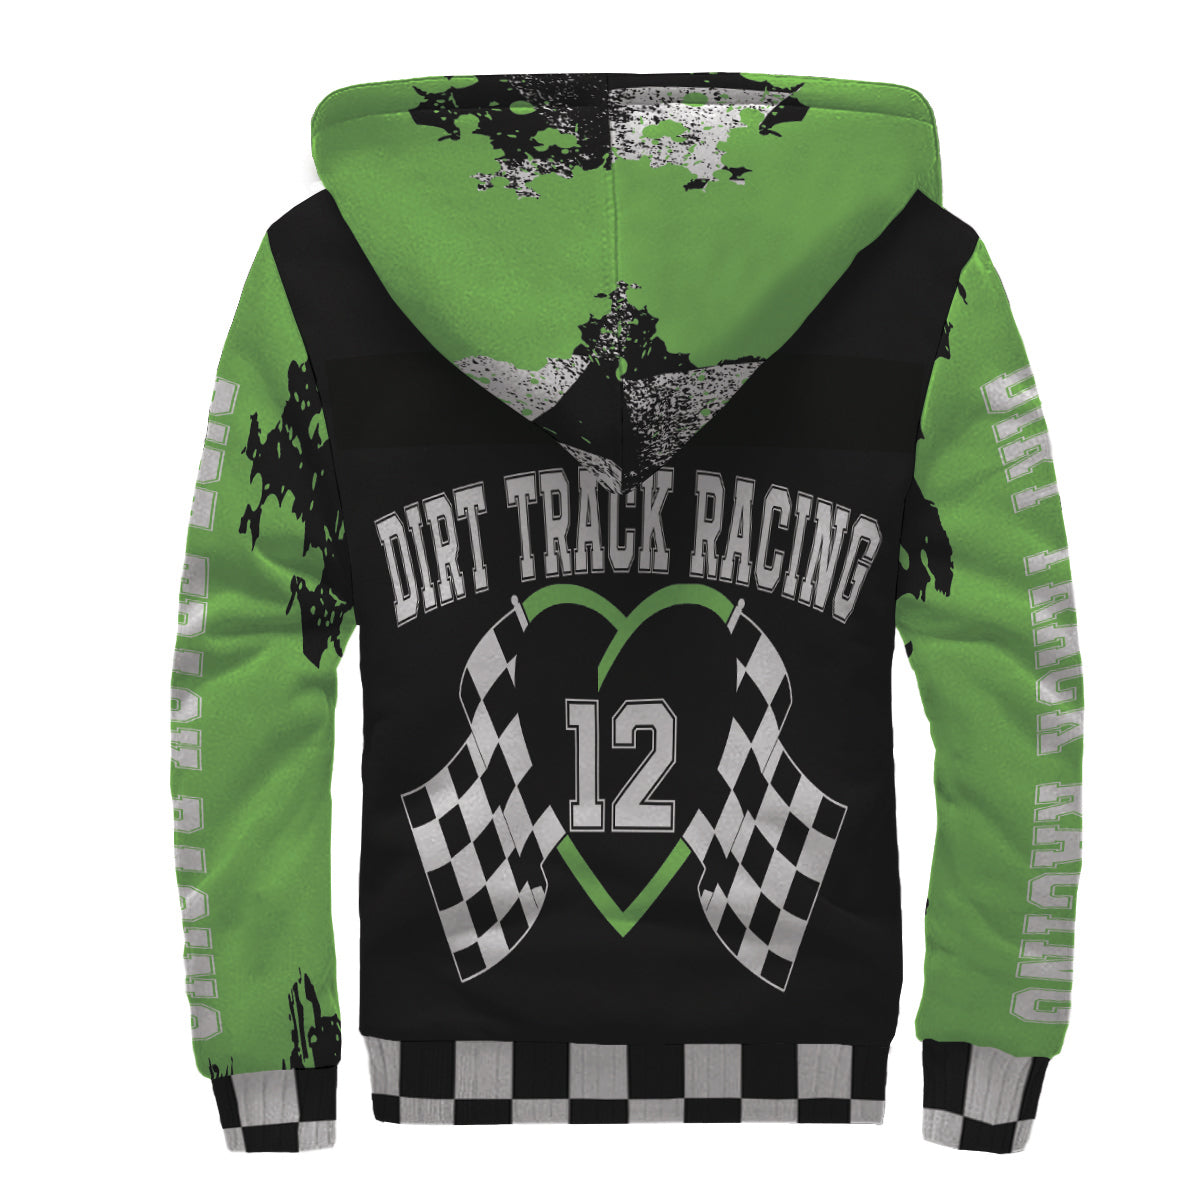 Dirt Track Racing Sherpa Jacket 